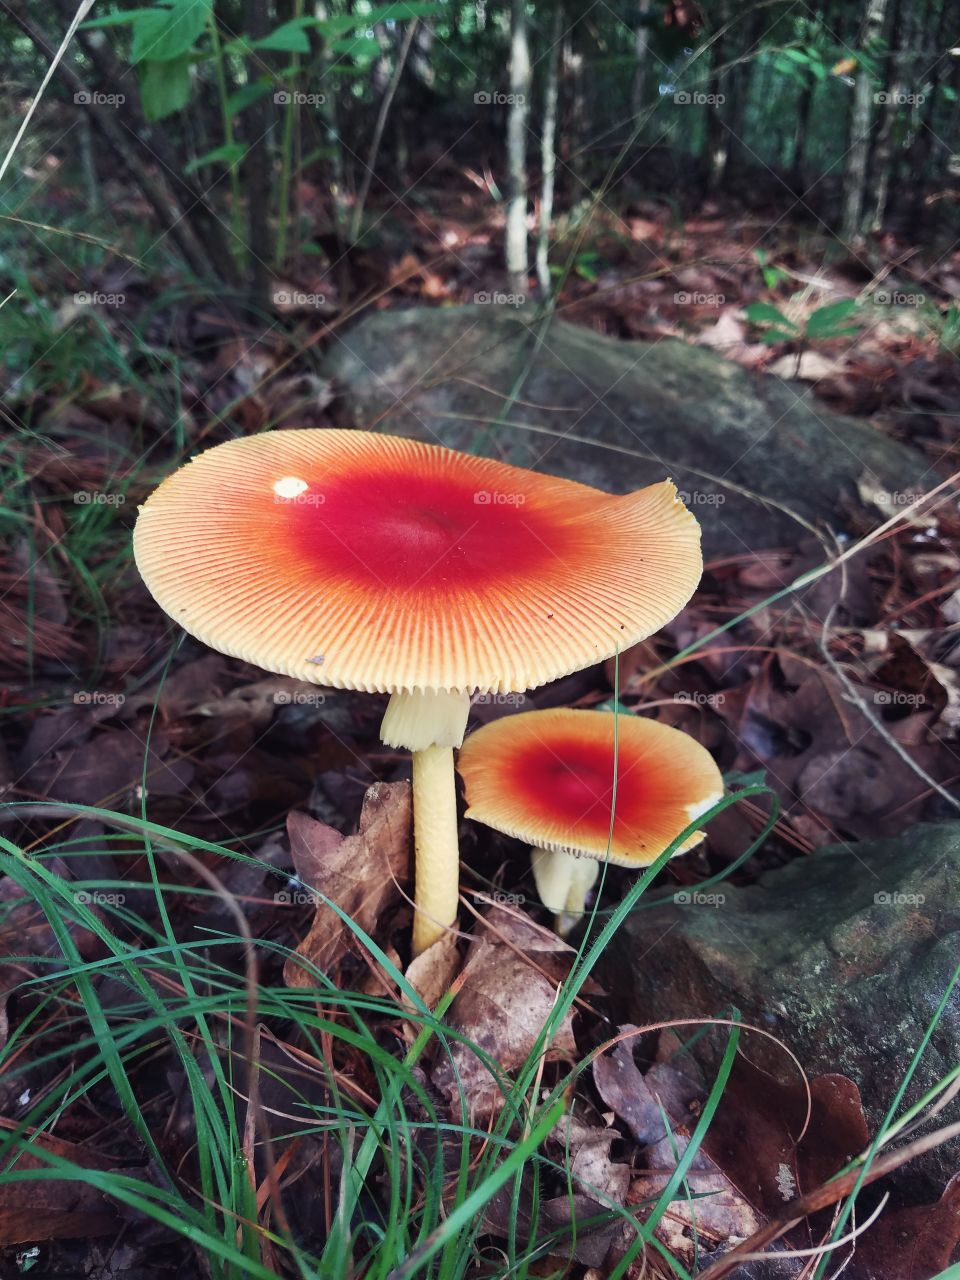 Wild mushrooms in the Ozark National Forest of Arkansas